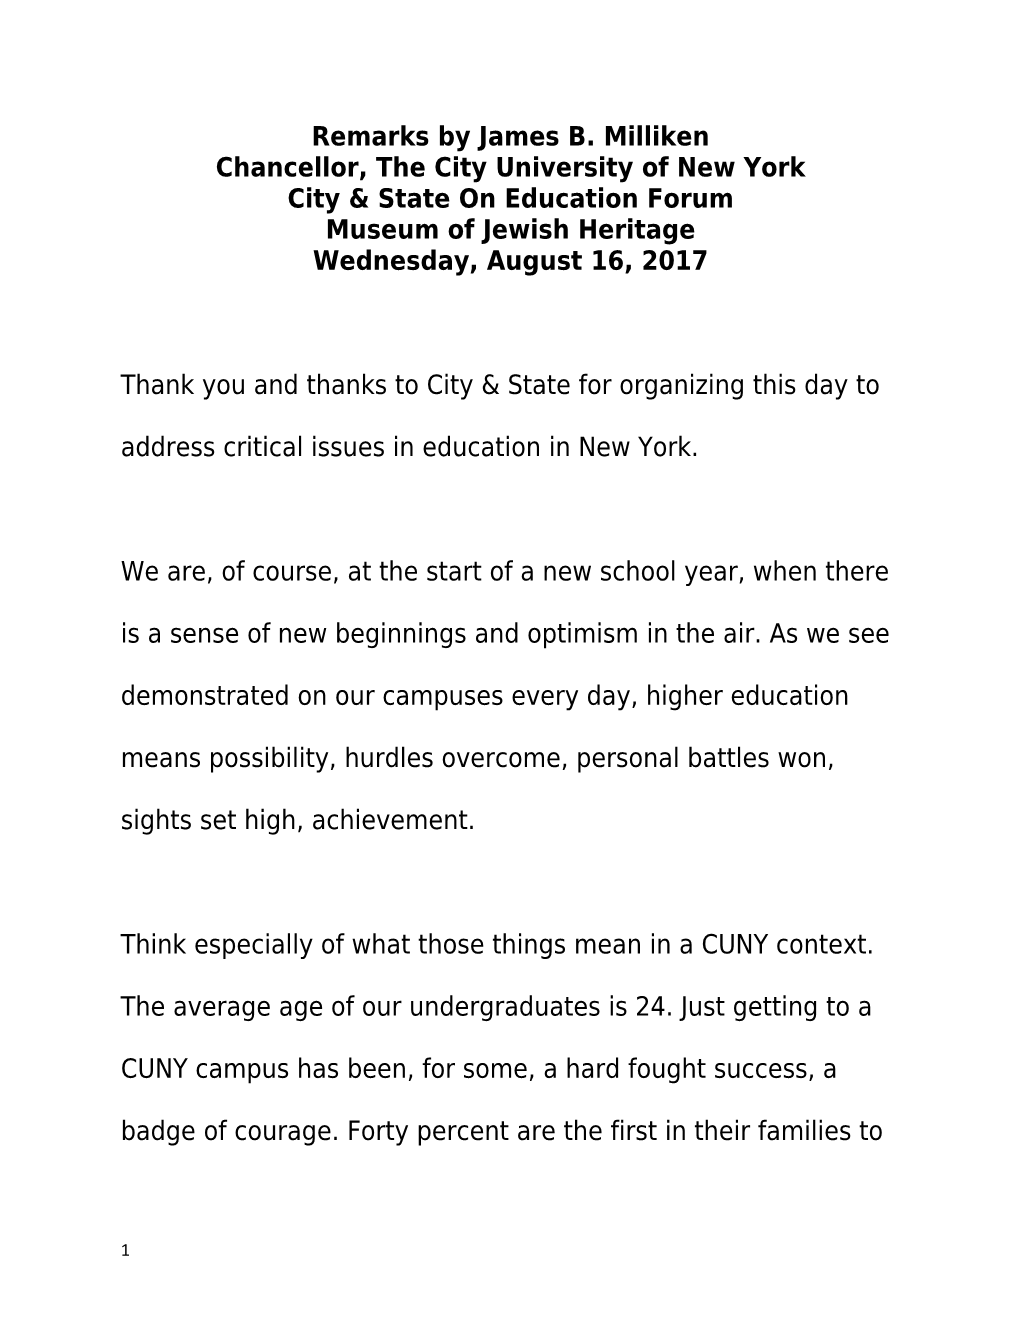 Chancellor, the City University of New York